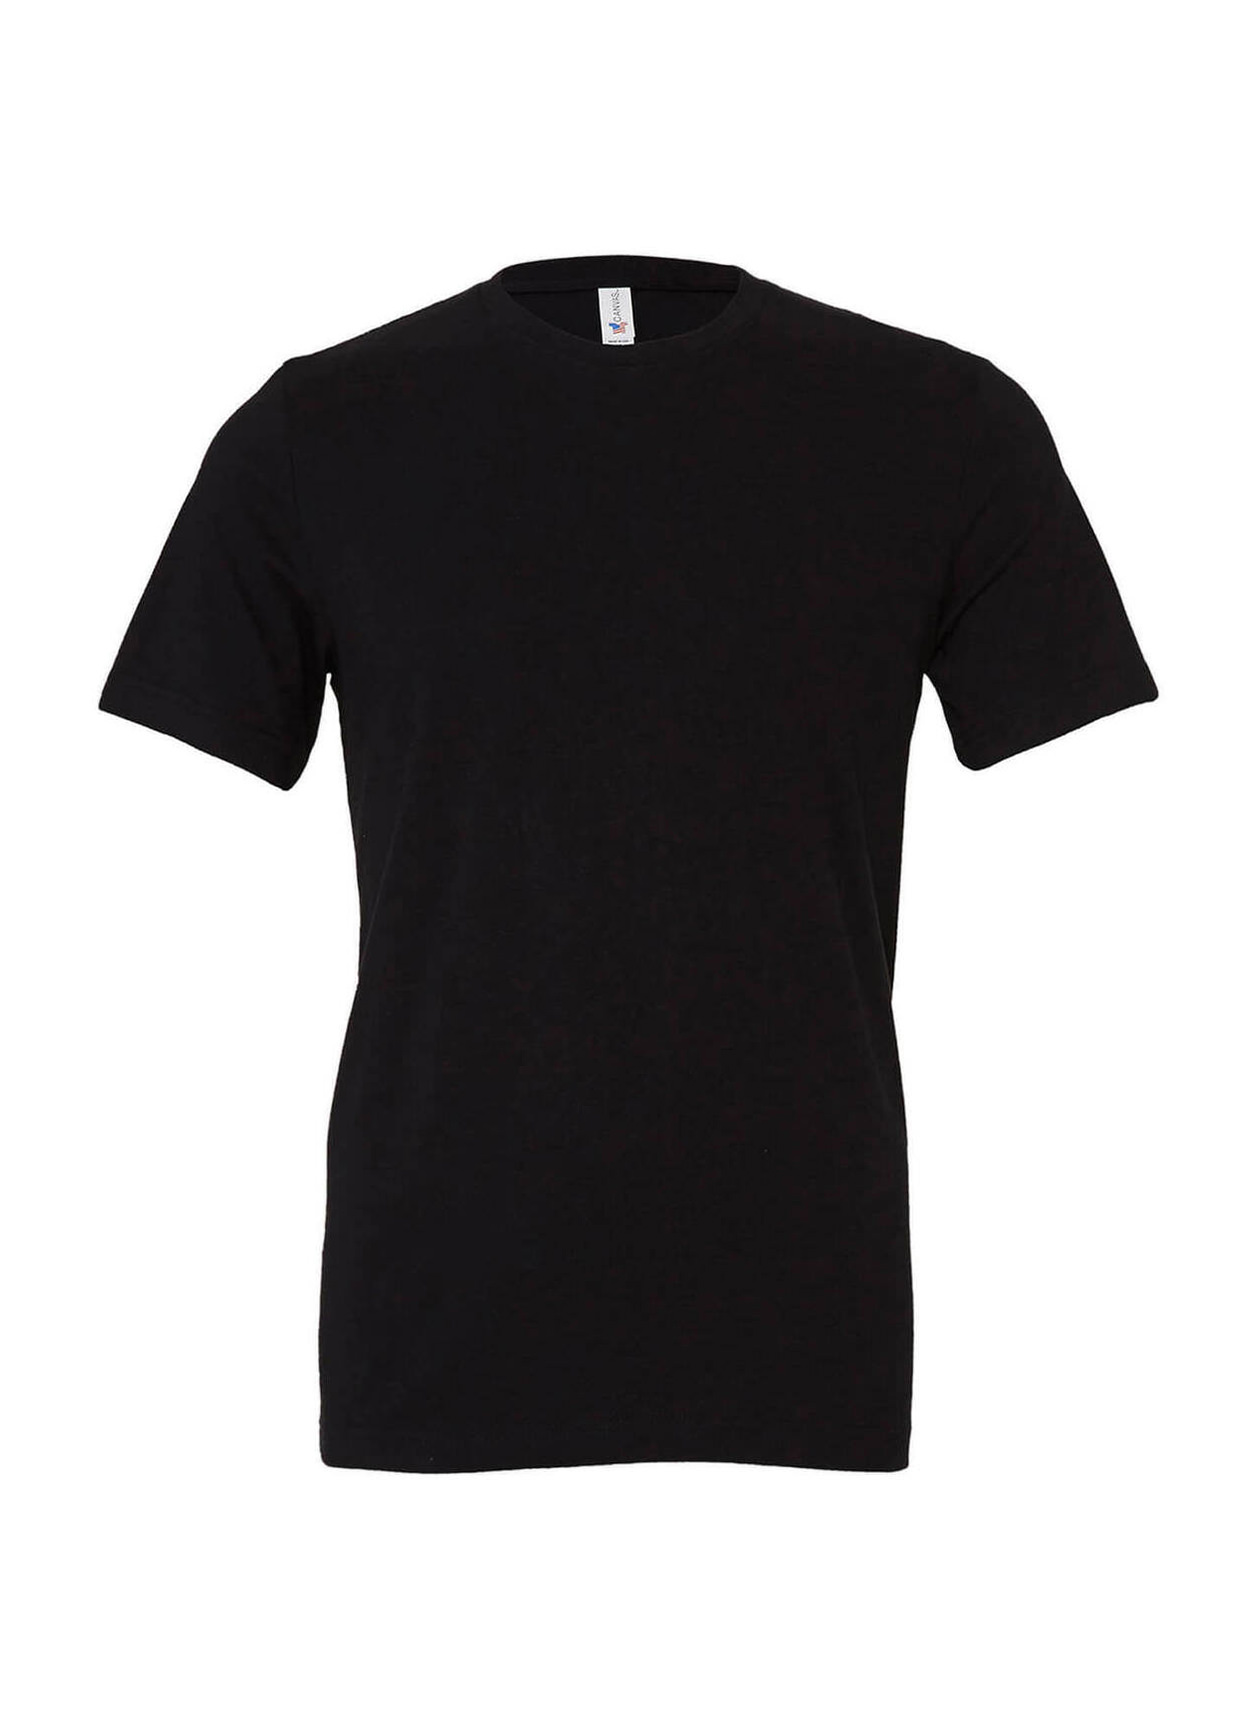 Bella + Canvas Men's Black Jersey T-Shirt